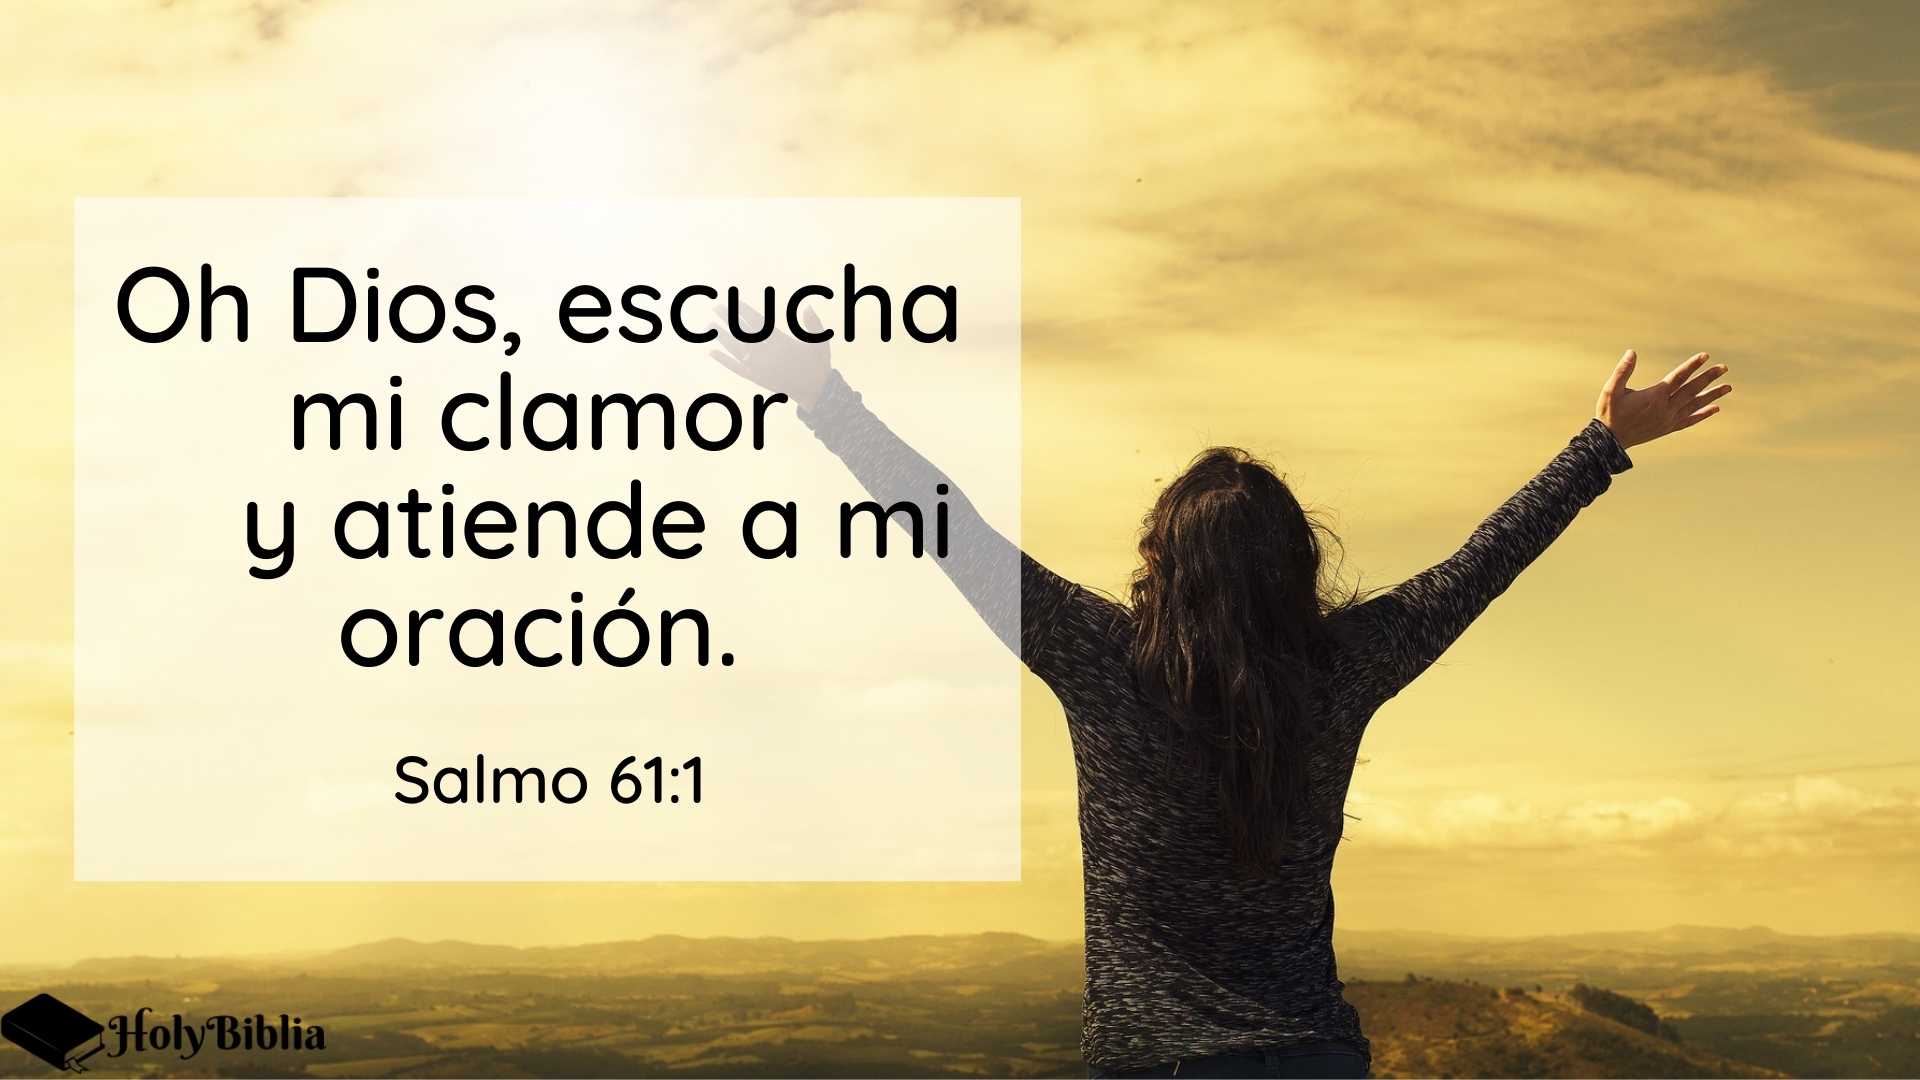 Salmo 61:1